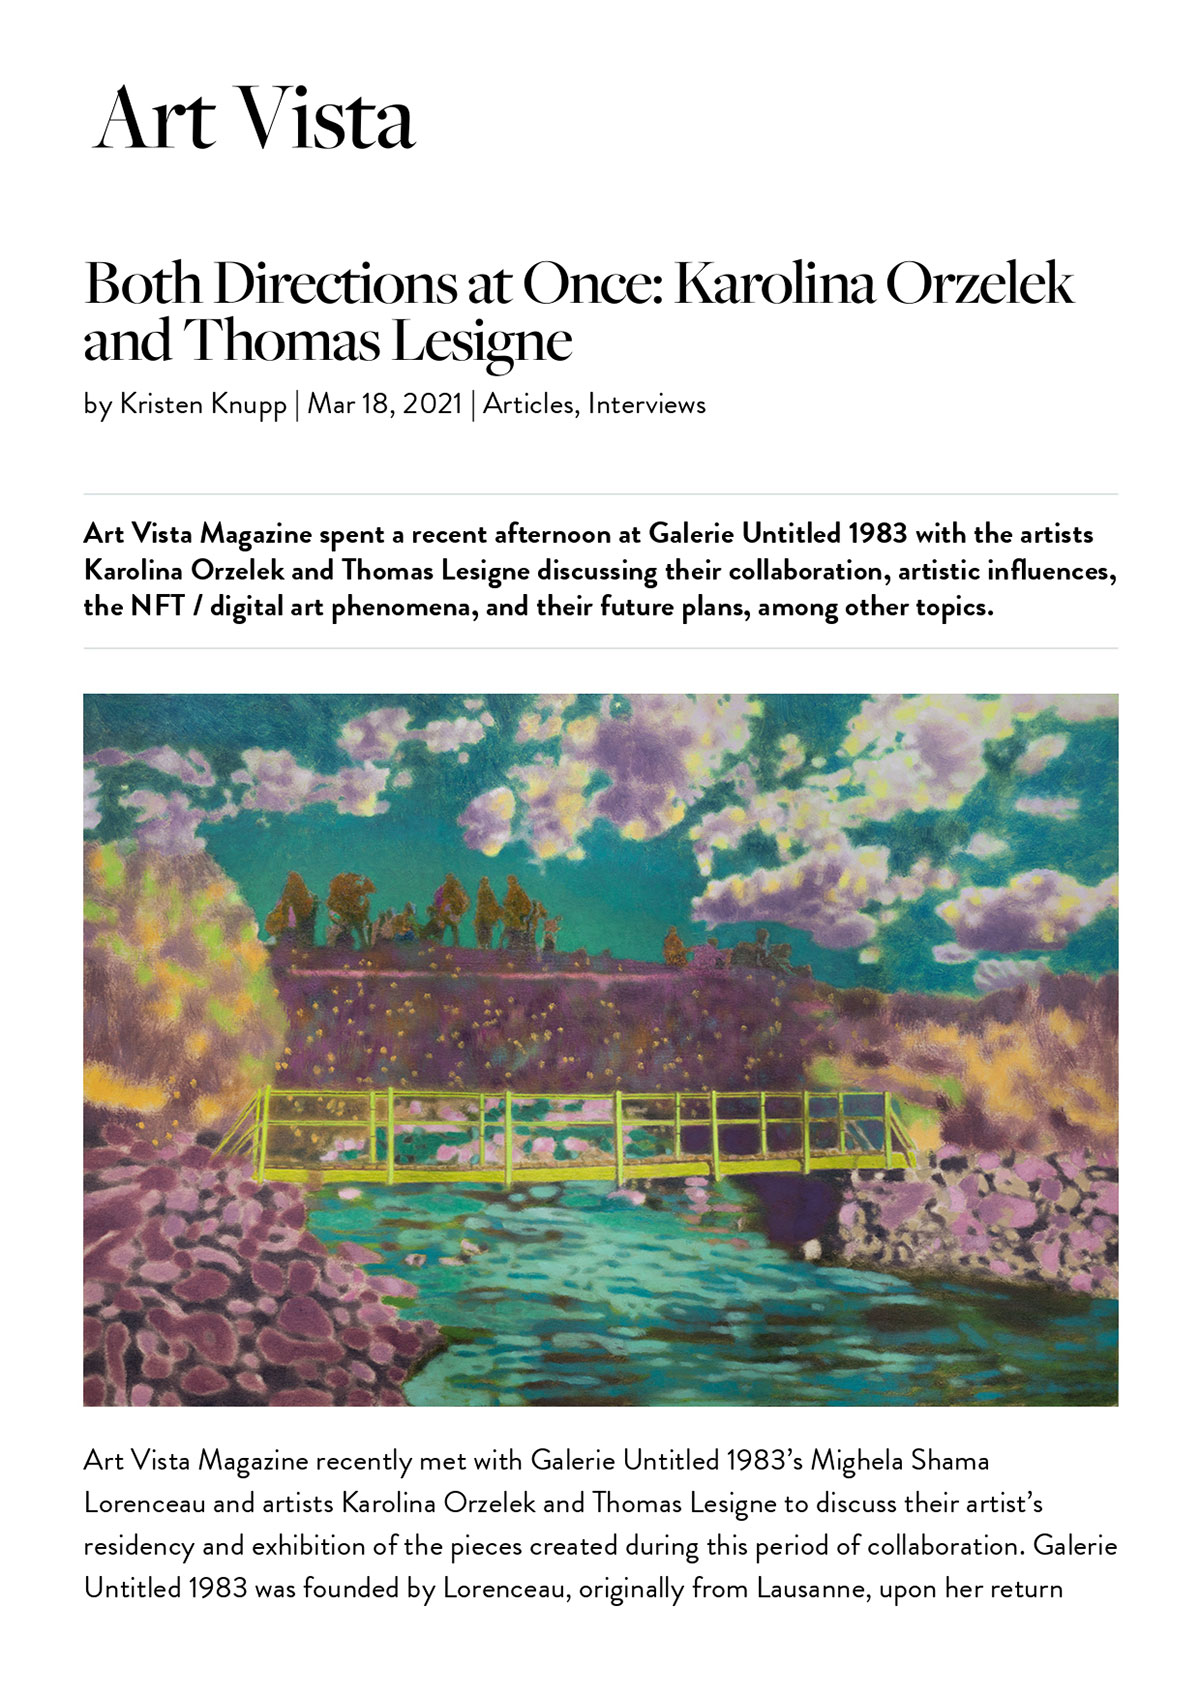 "Both Directions at Once : Karolina Orzelek and Thomas Lesigne", Kristen Knupp, Art Vista, March 18, 2021